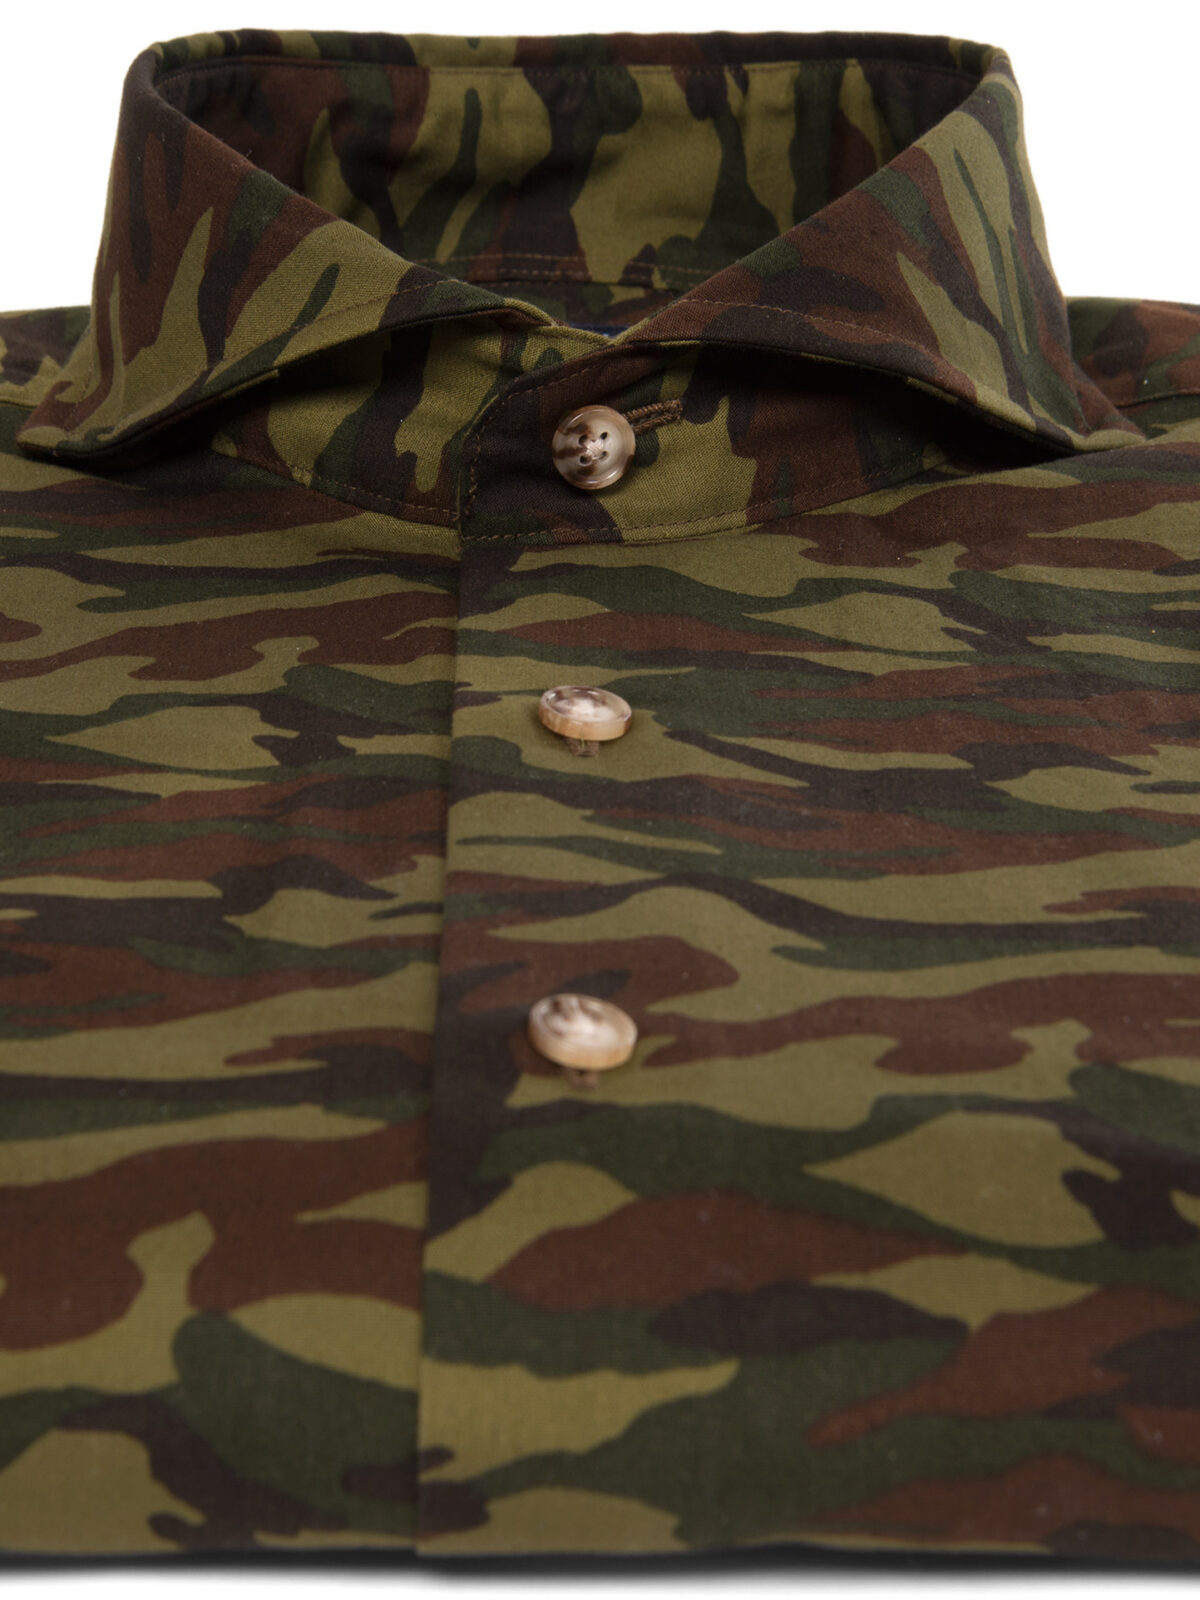 Shop Sky Blue CamoT Shirts - Fatigues Army Navy Gear